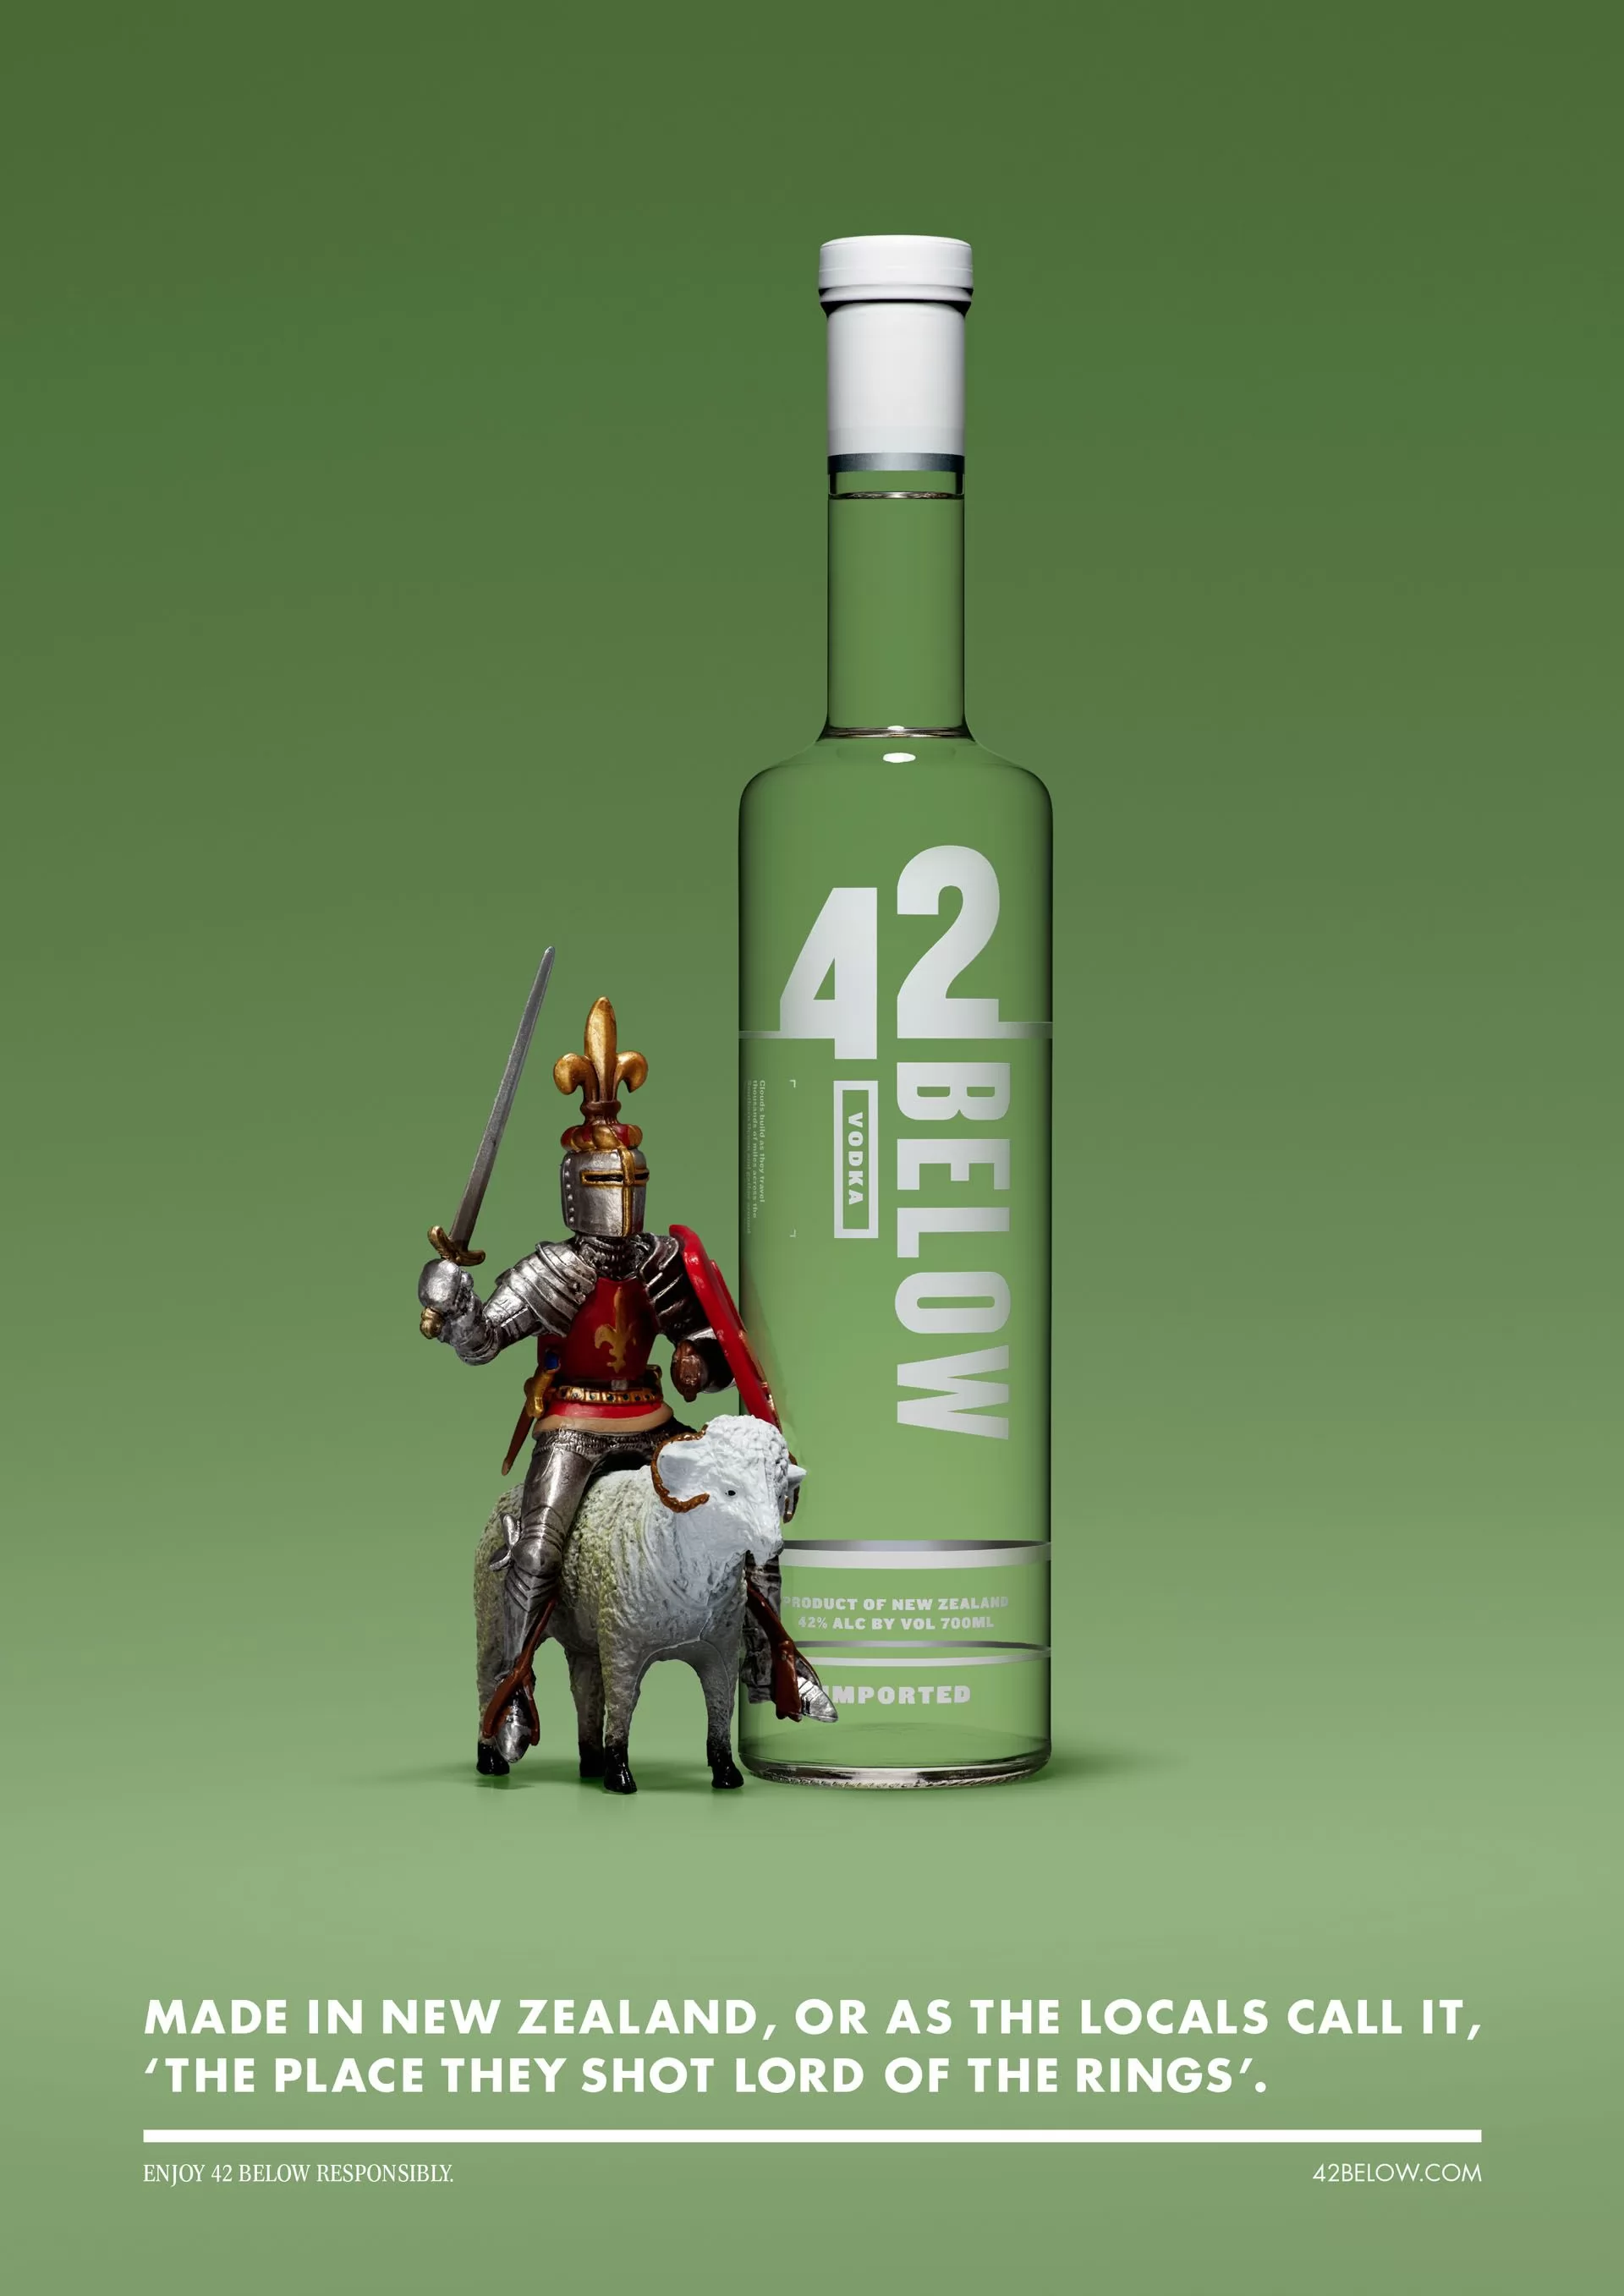 42 Below vodka